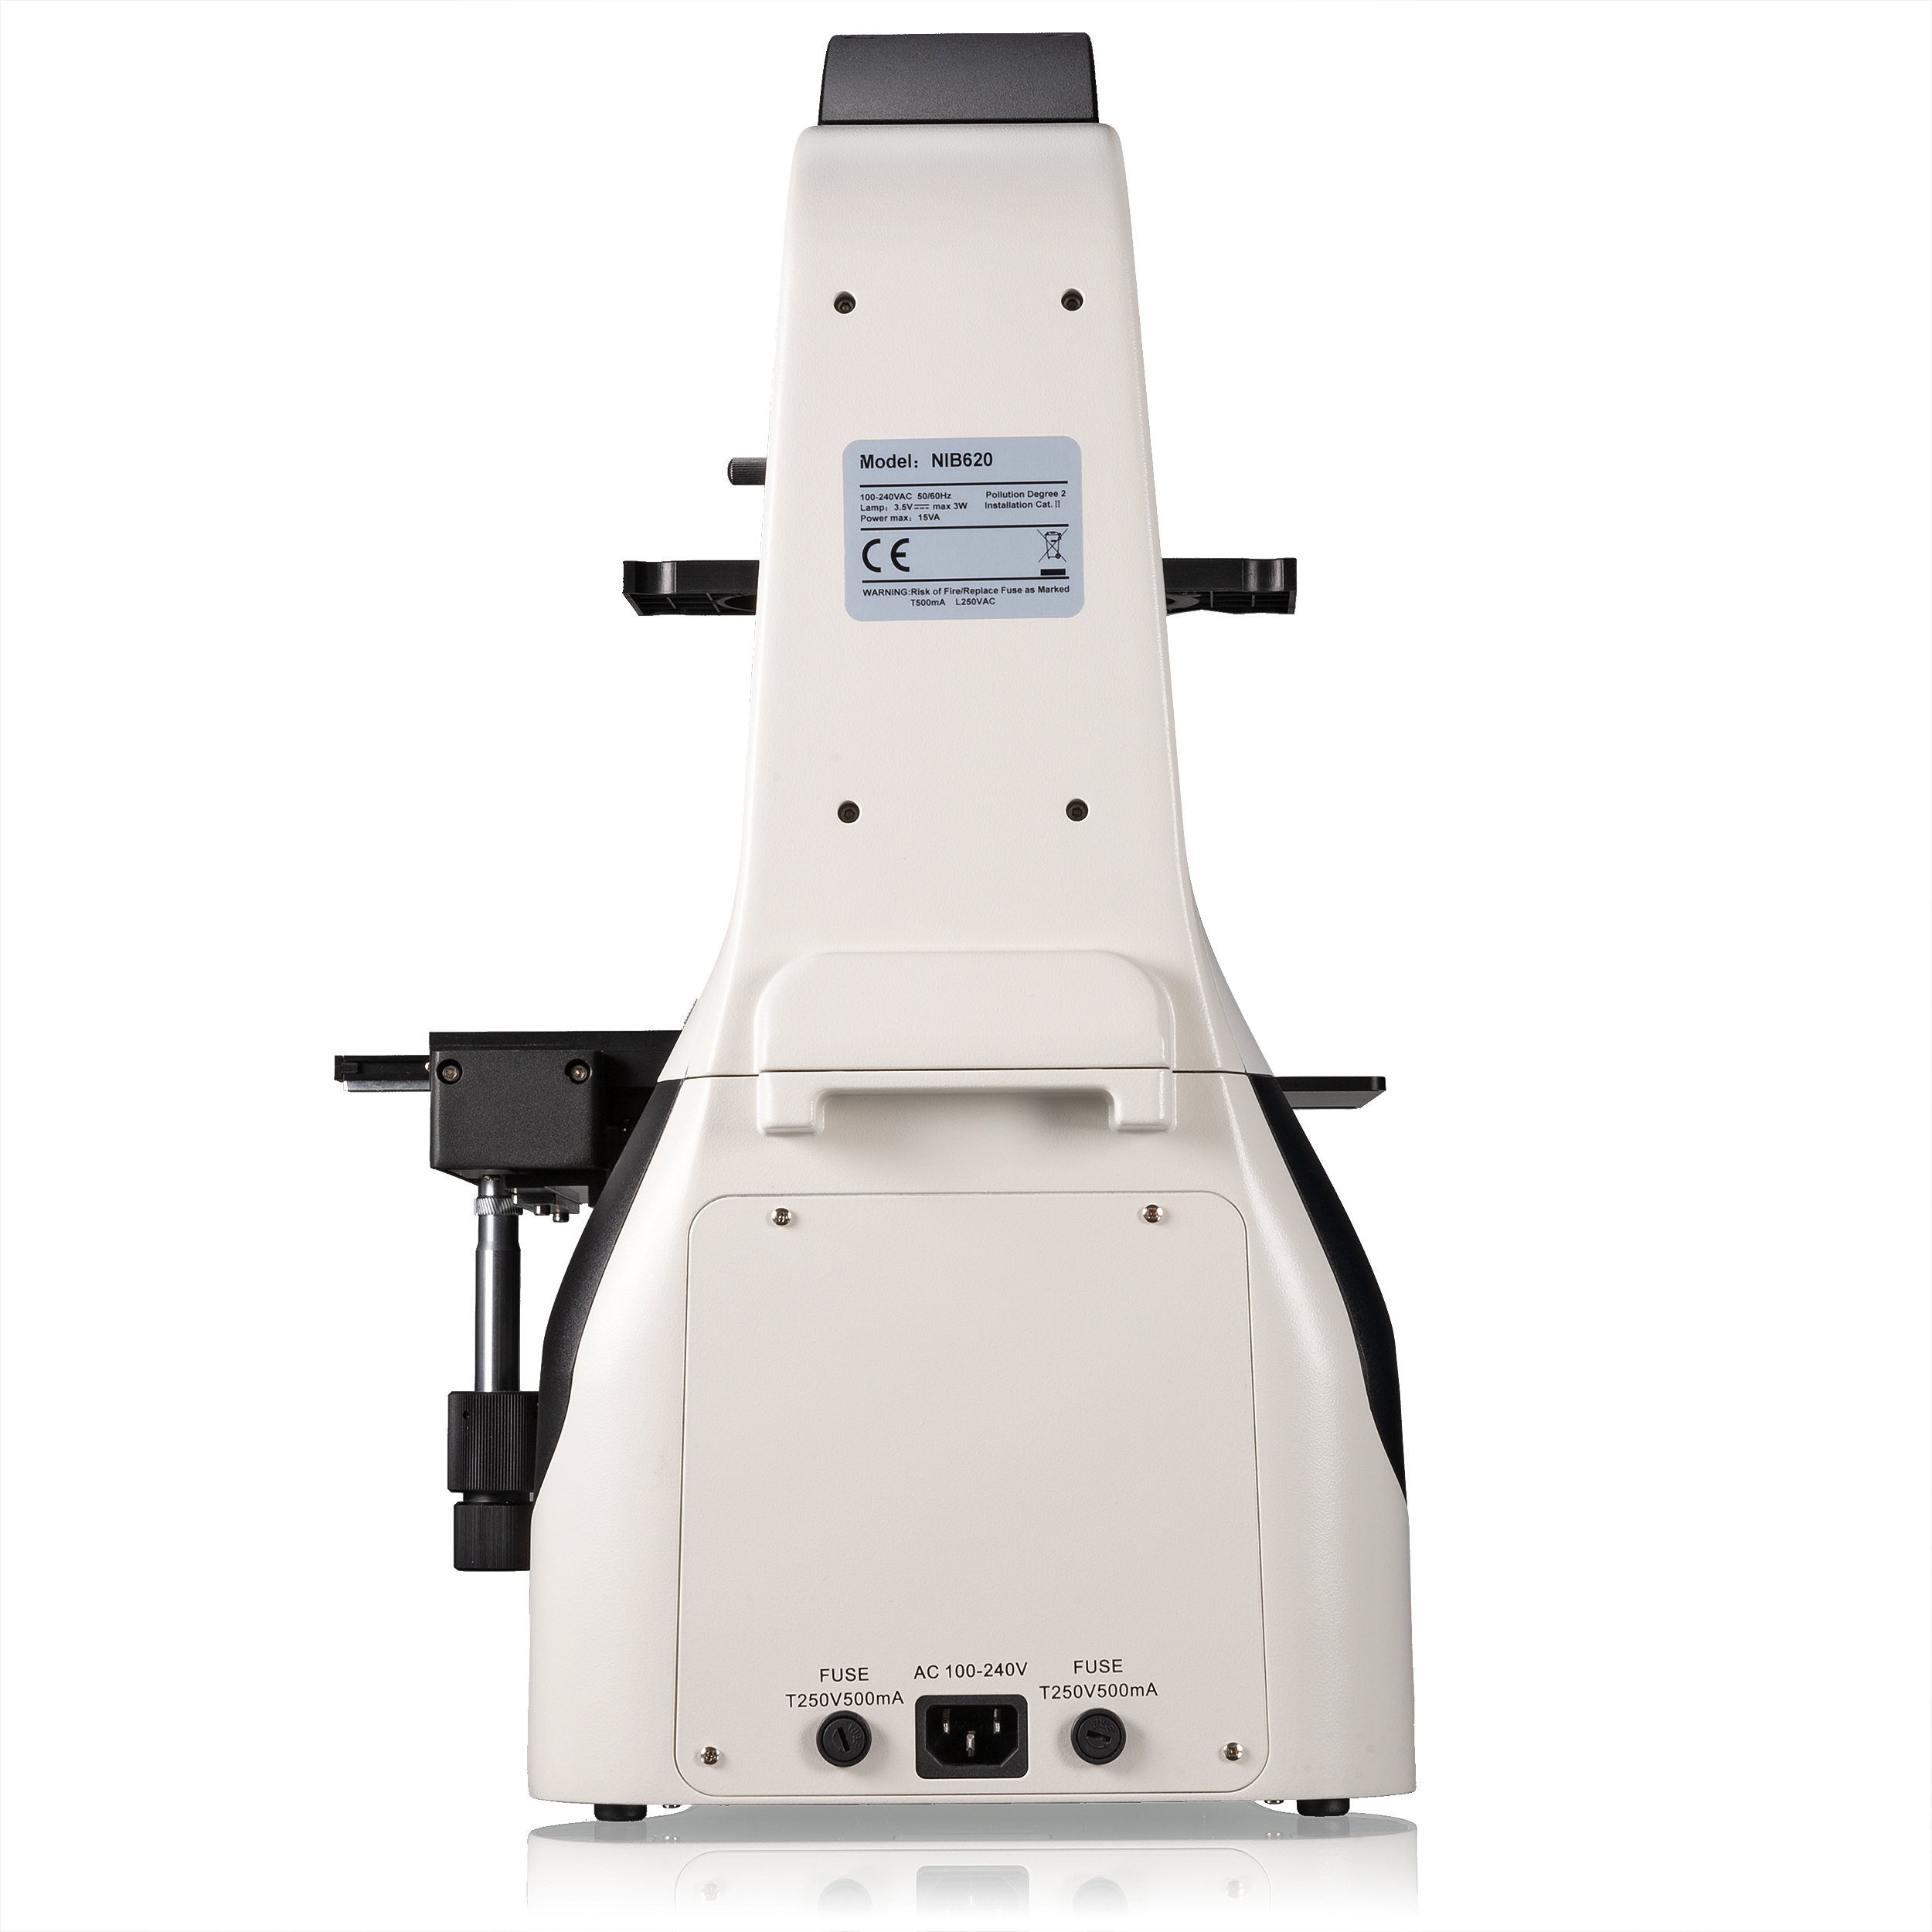 Nexcope NIB620 professionelles, inverses Labor-Mikroskop mit Phasenkontrast